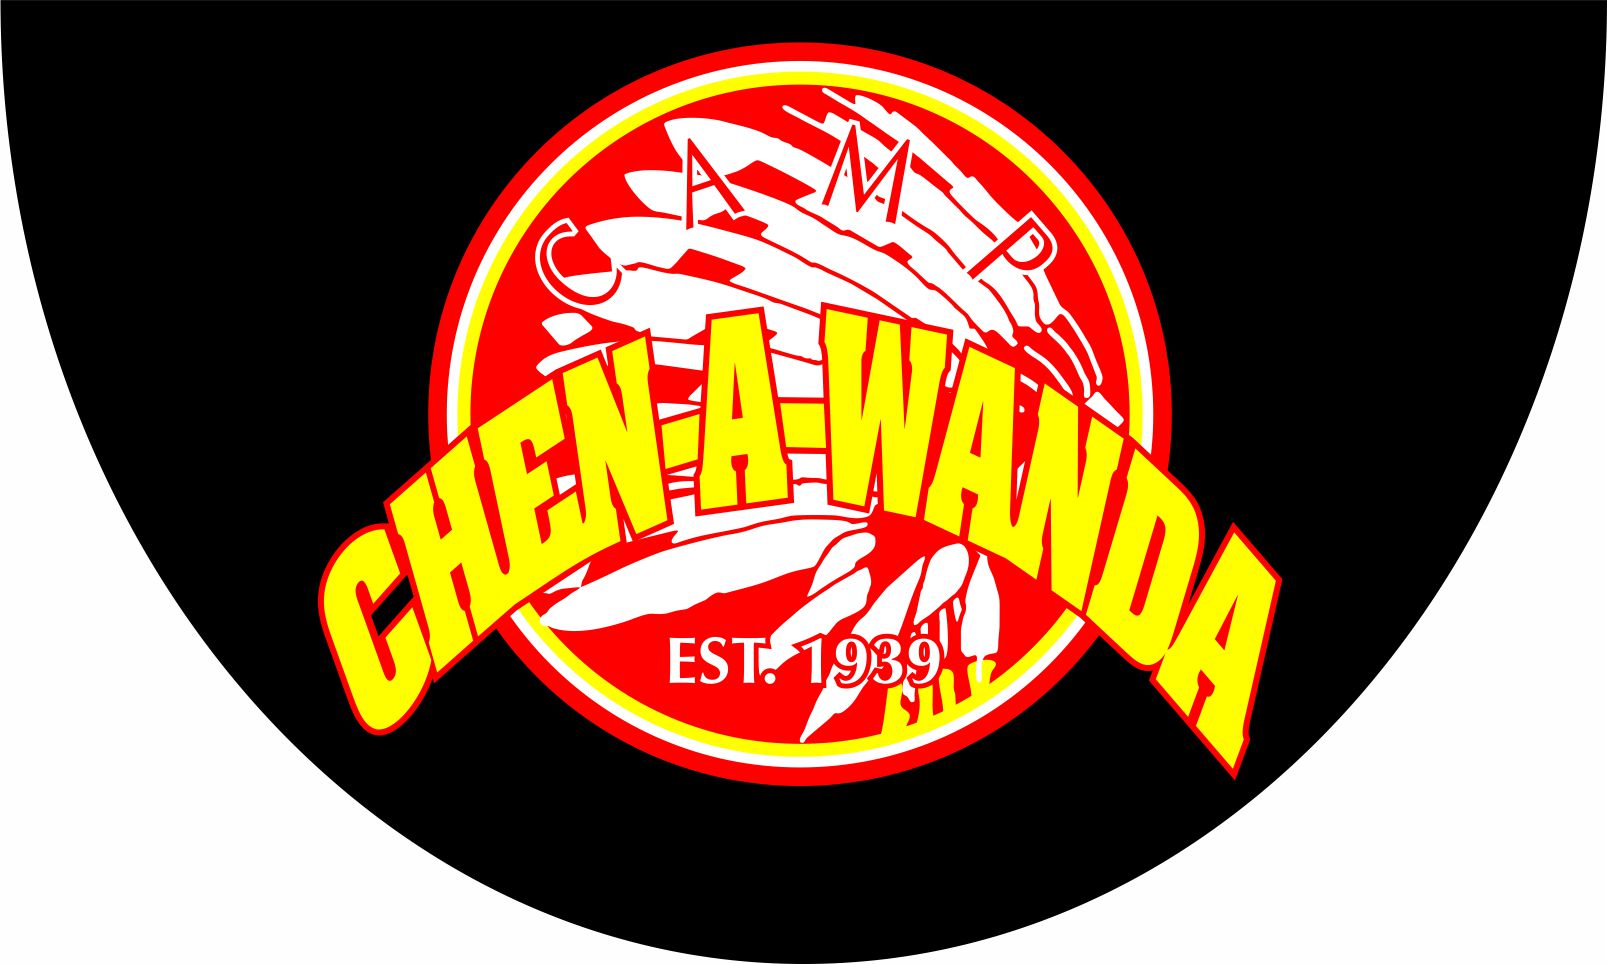 Camp Chen-A-Wanda 3 x 5 Luxury Berber Inlay - The Personalized Doormats Company